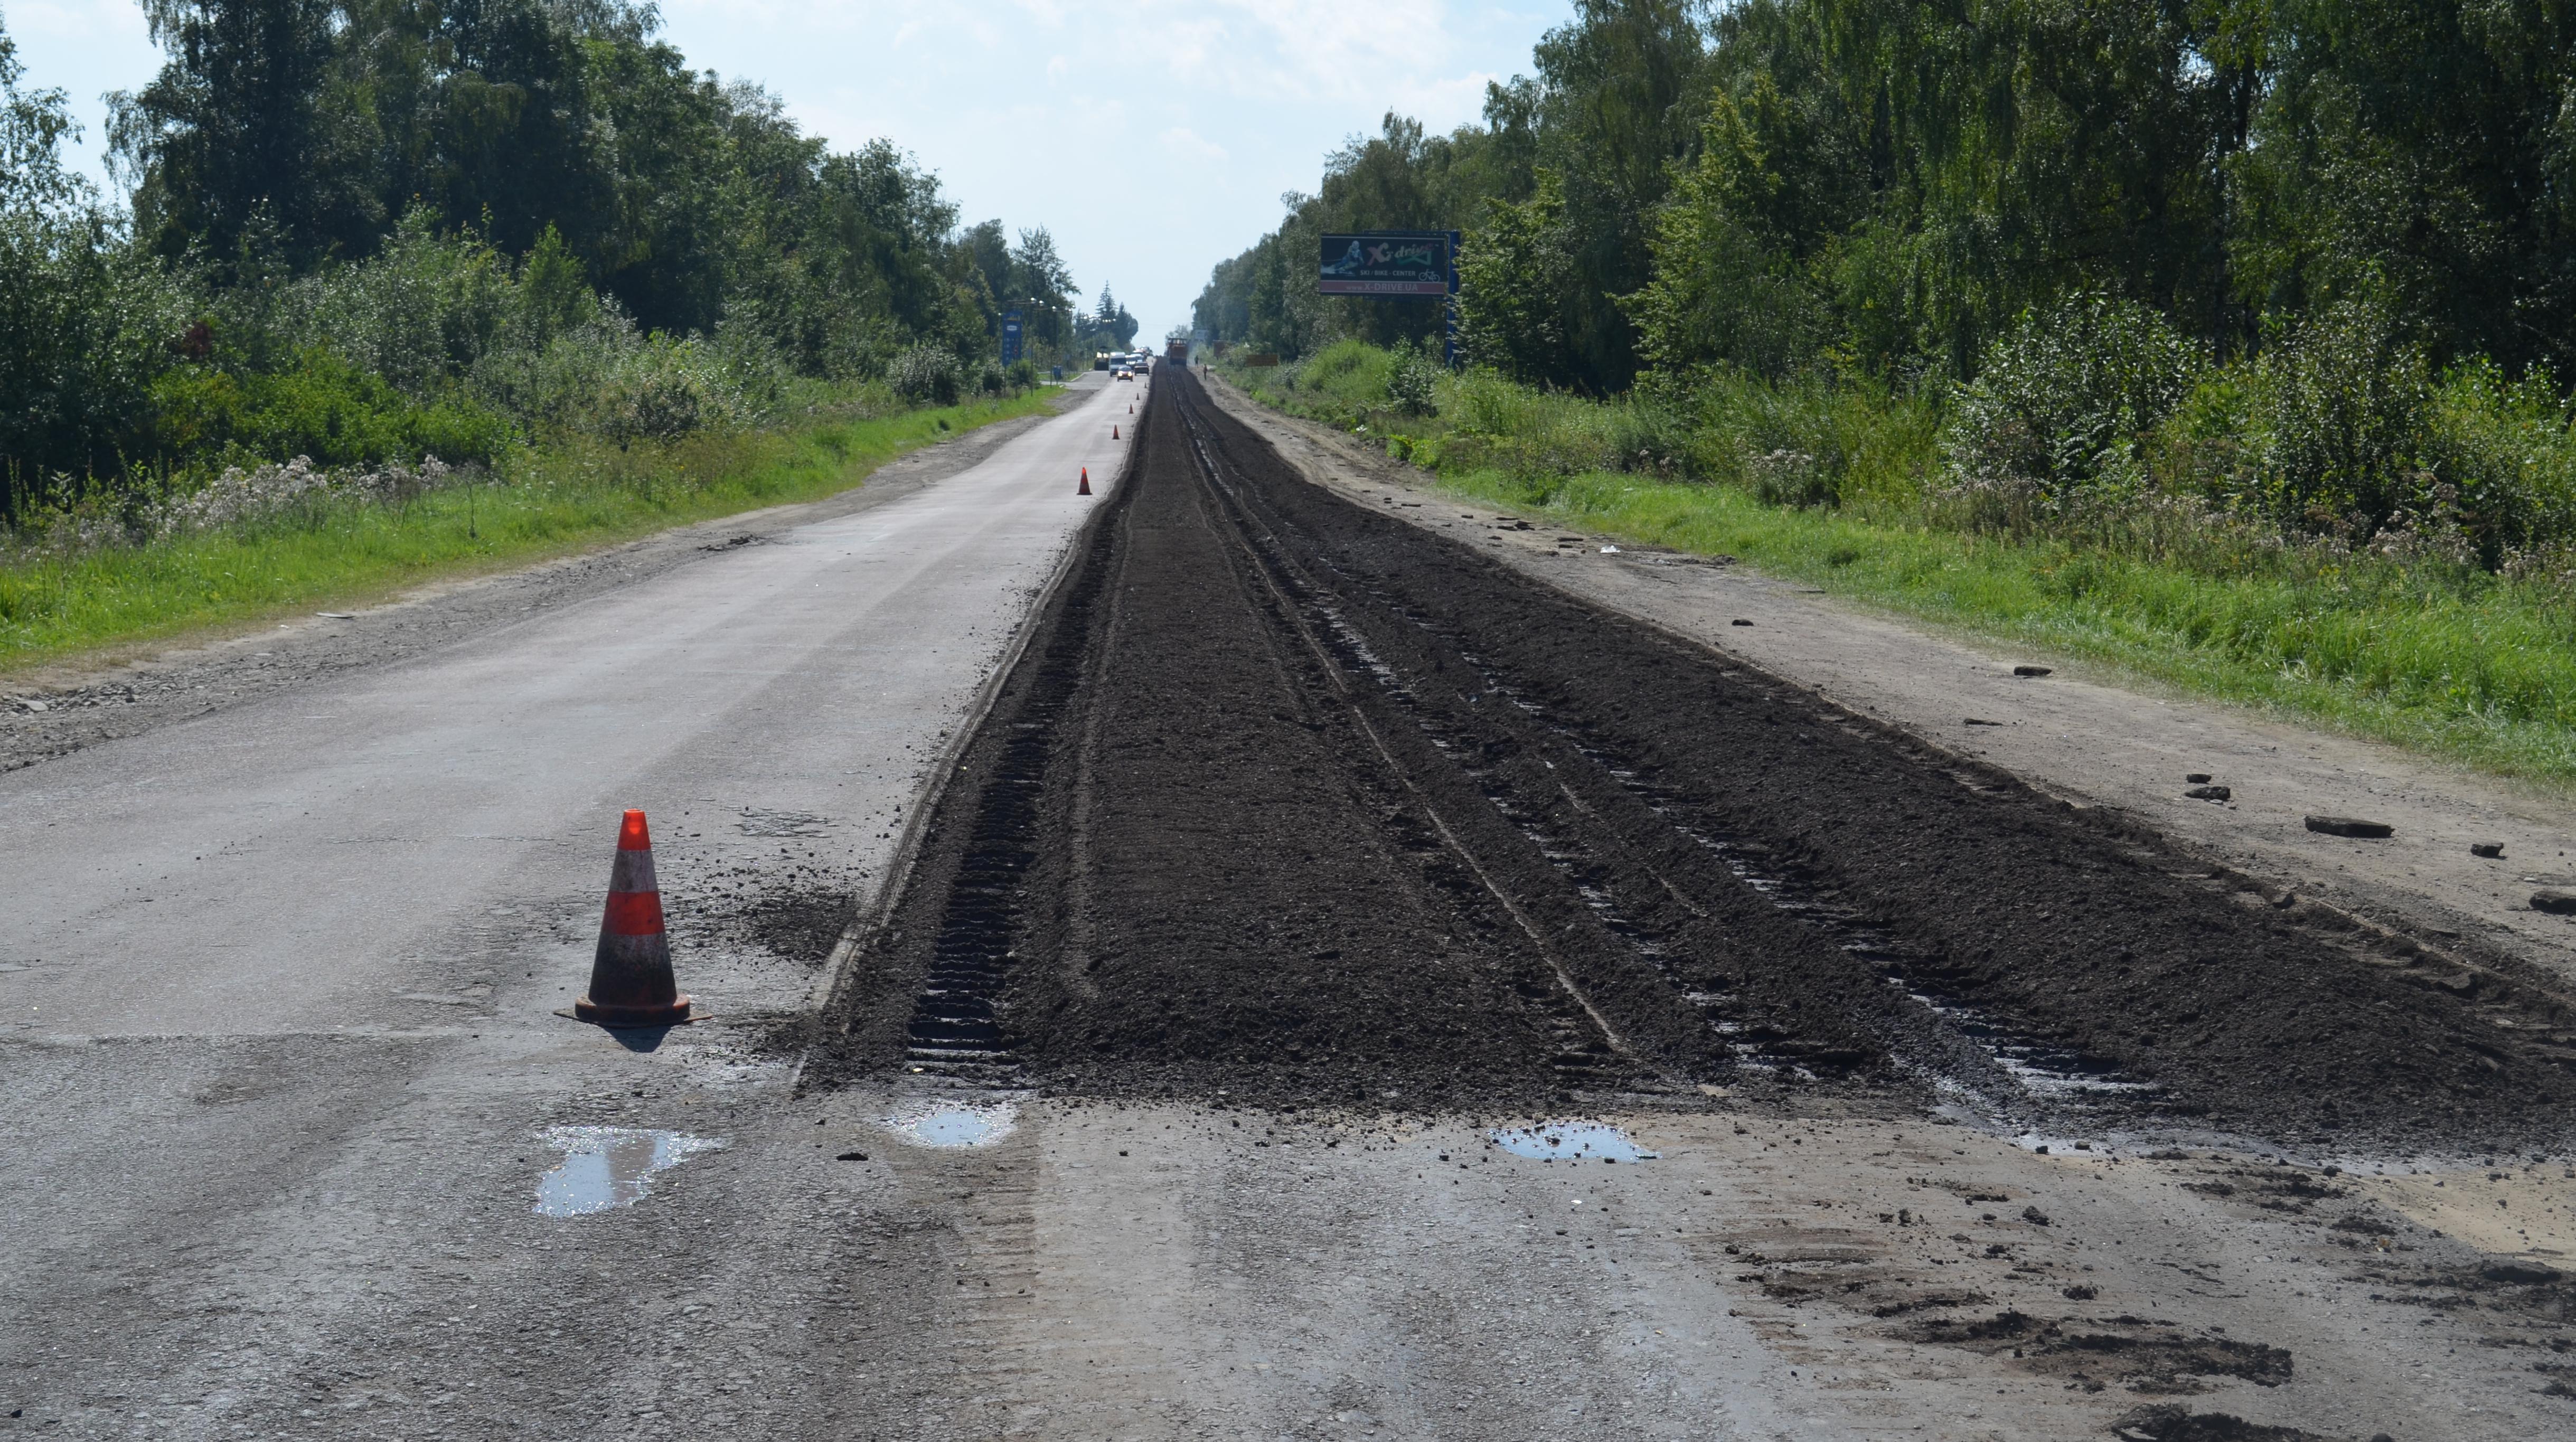 Strymba-Loieva: old road surface loosening is underway